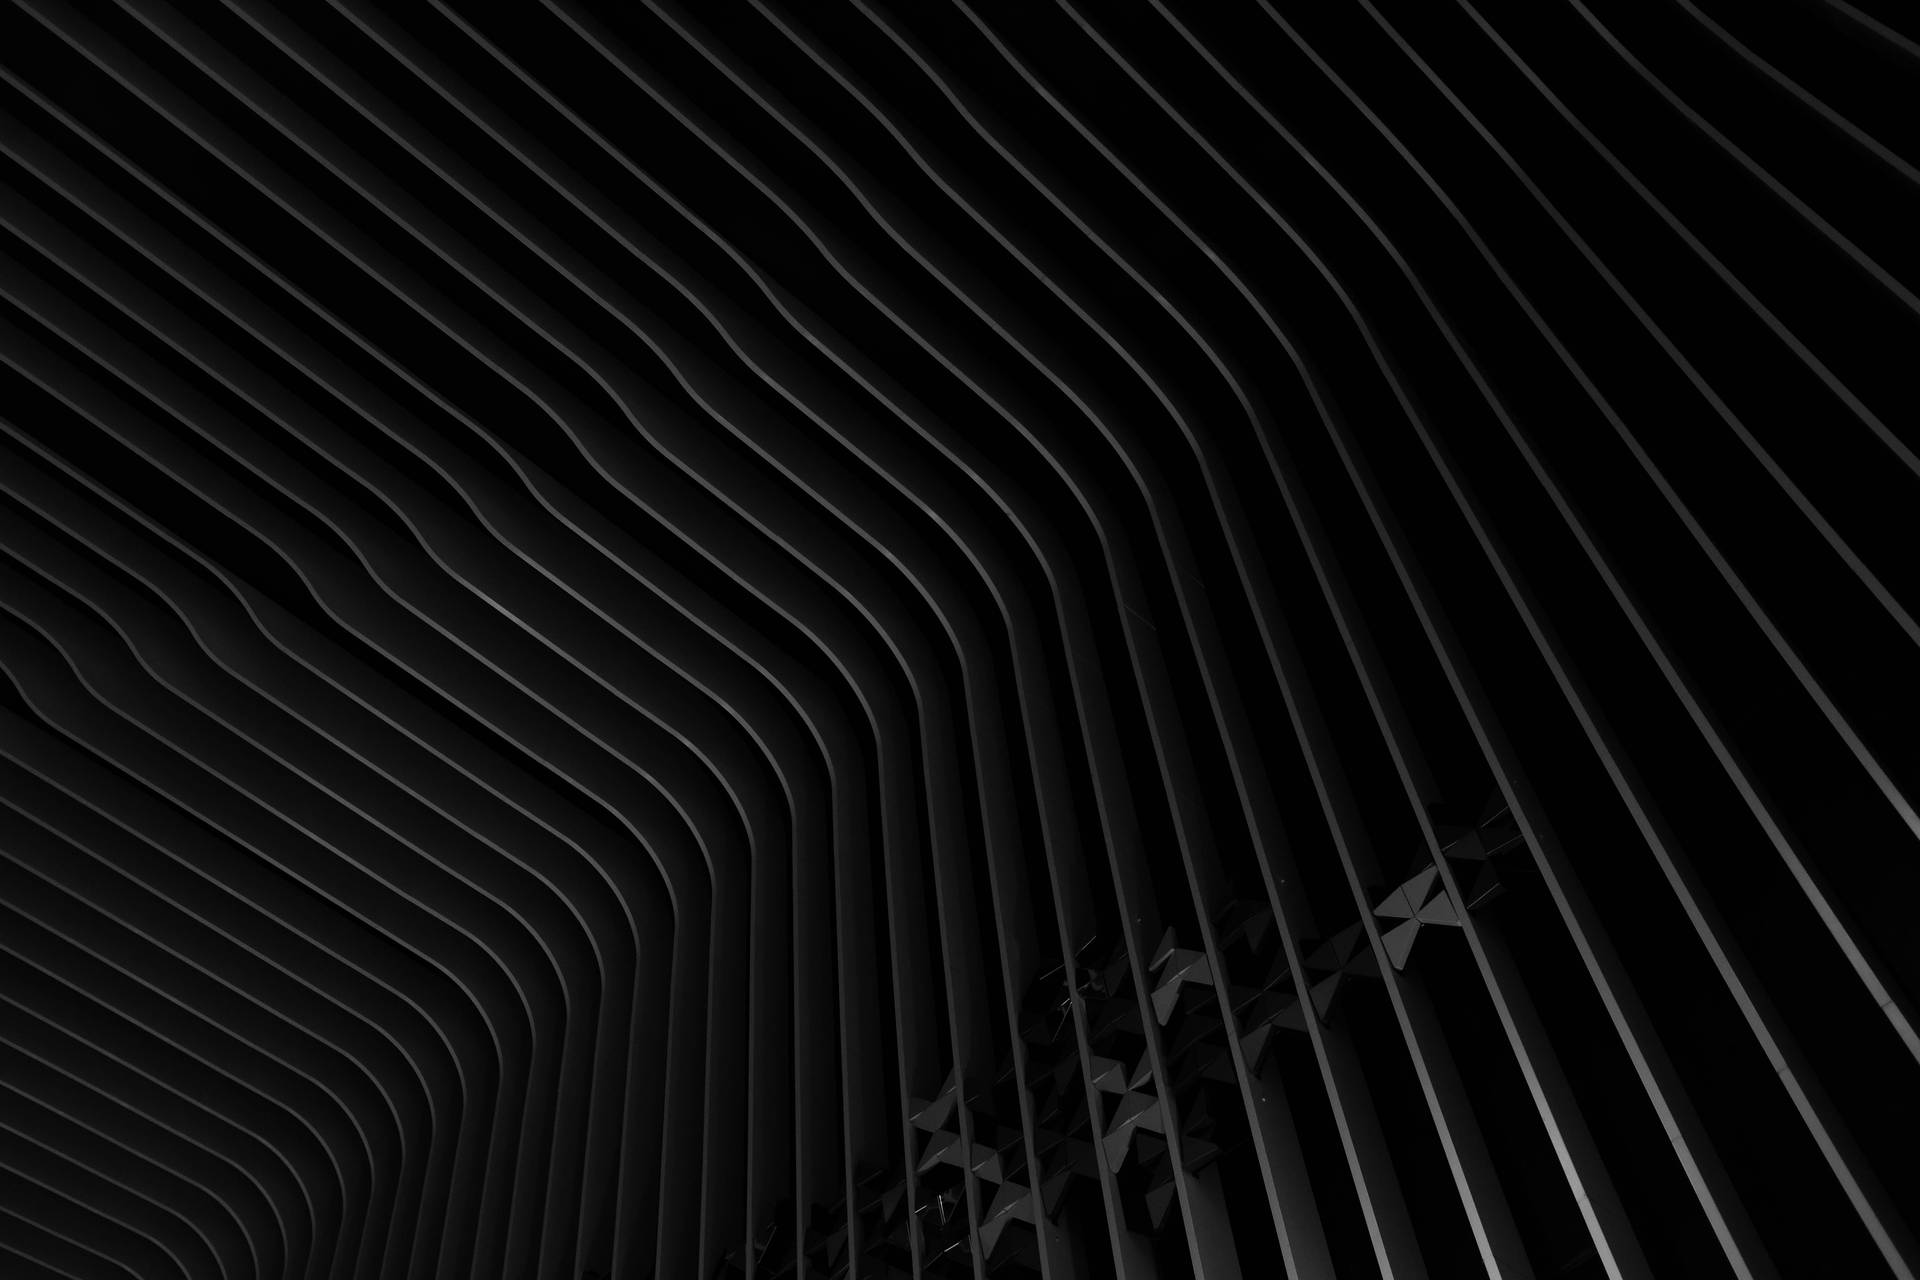 Caption: Sleek Black Abstract Metallic Stripes Wallpaper